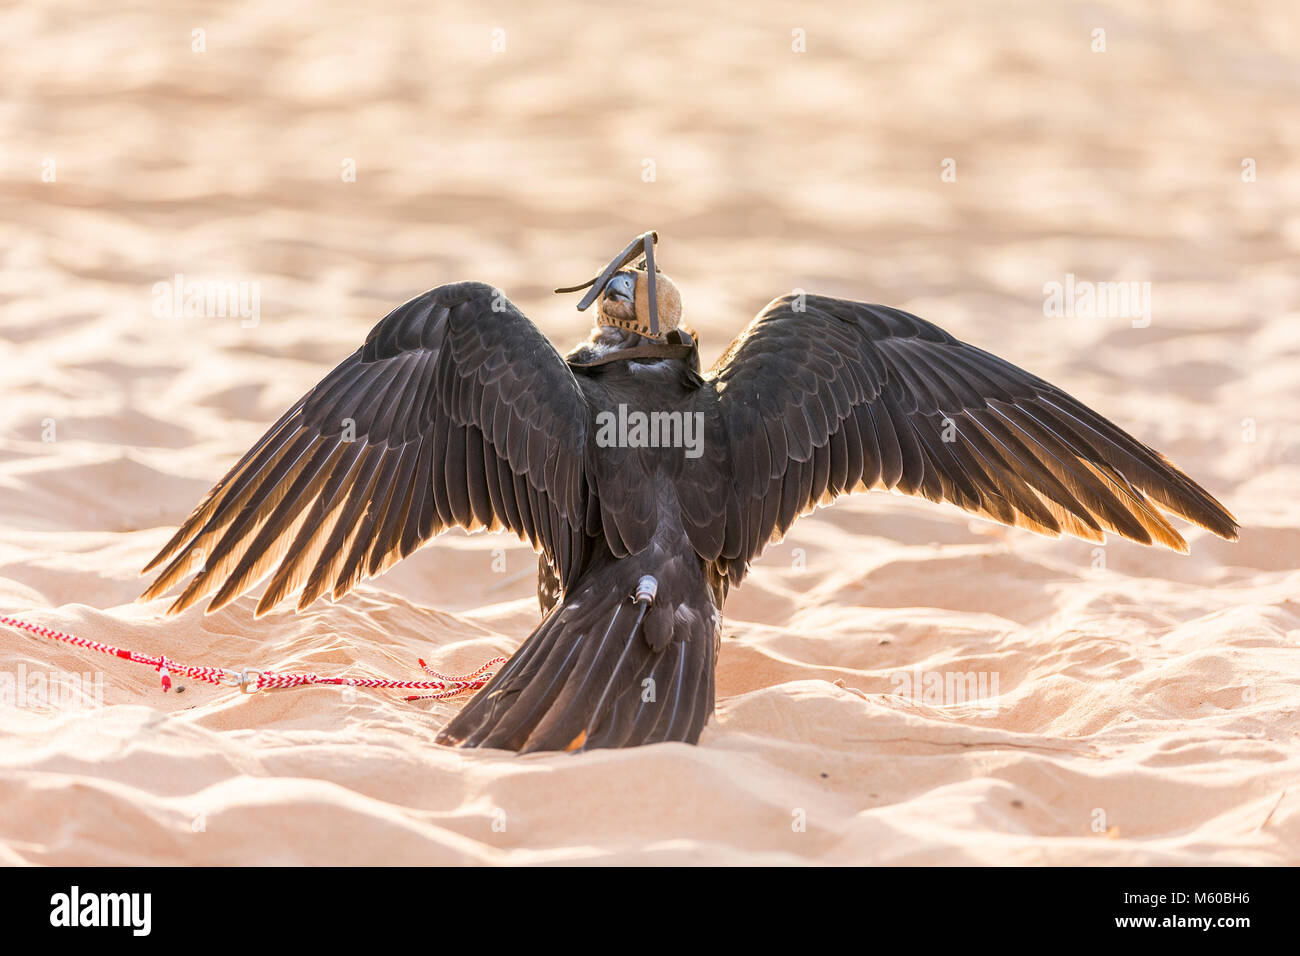 Saker Falcon (Falco cherrug). Trained bird with hood standing on sand. Abu Dhabi Stock Photo